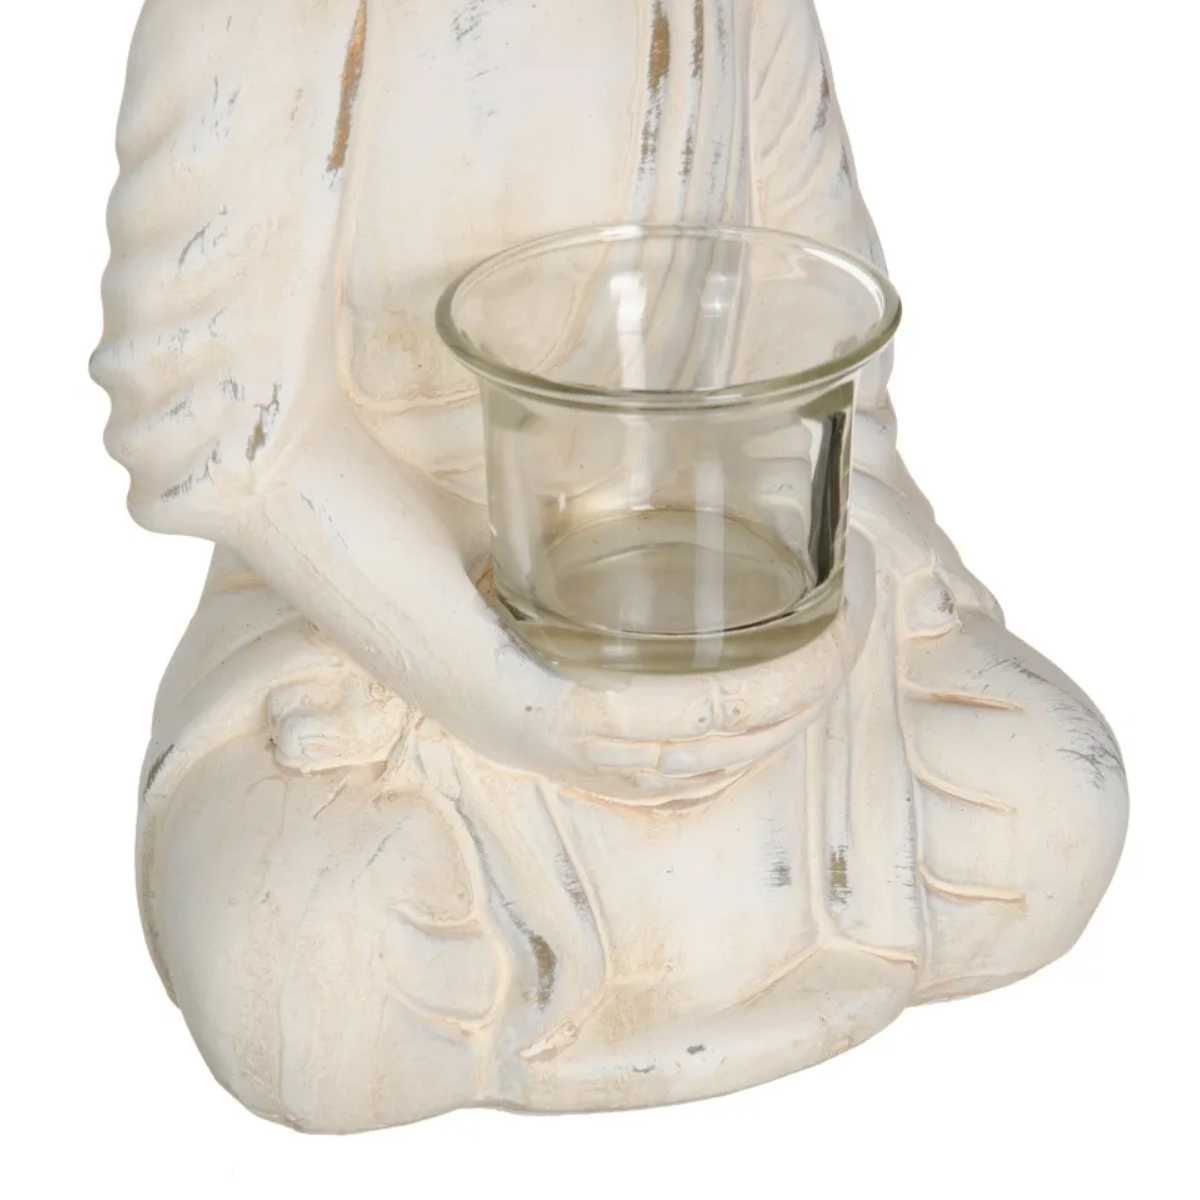 Terracotta Buddha candle holder